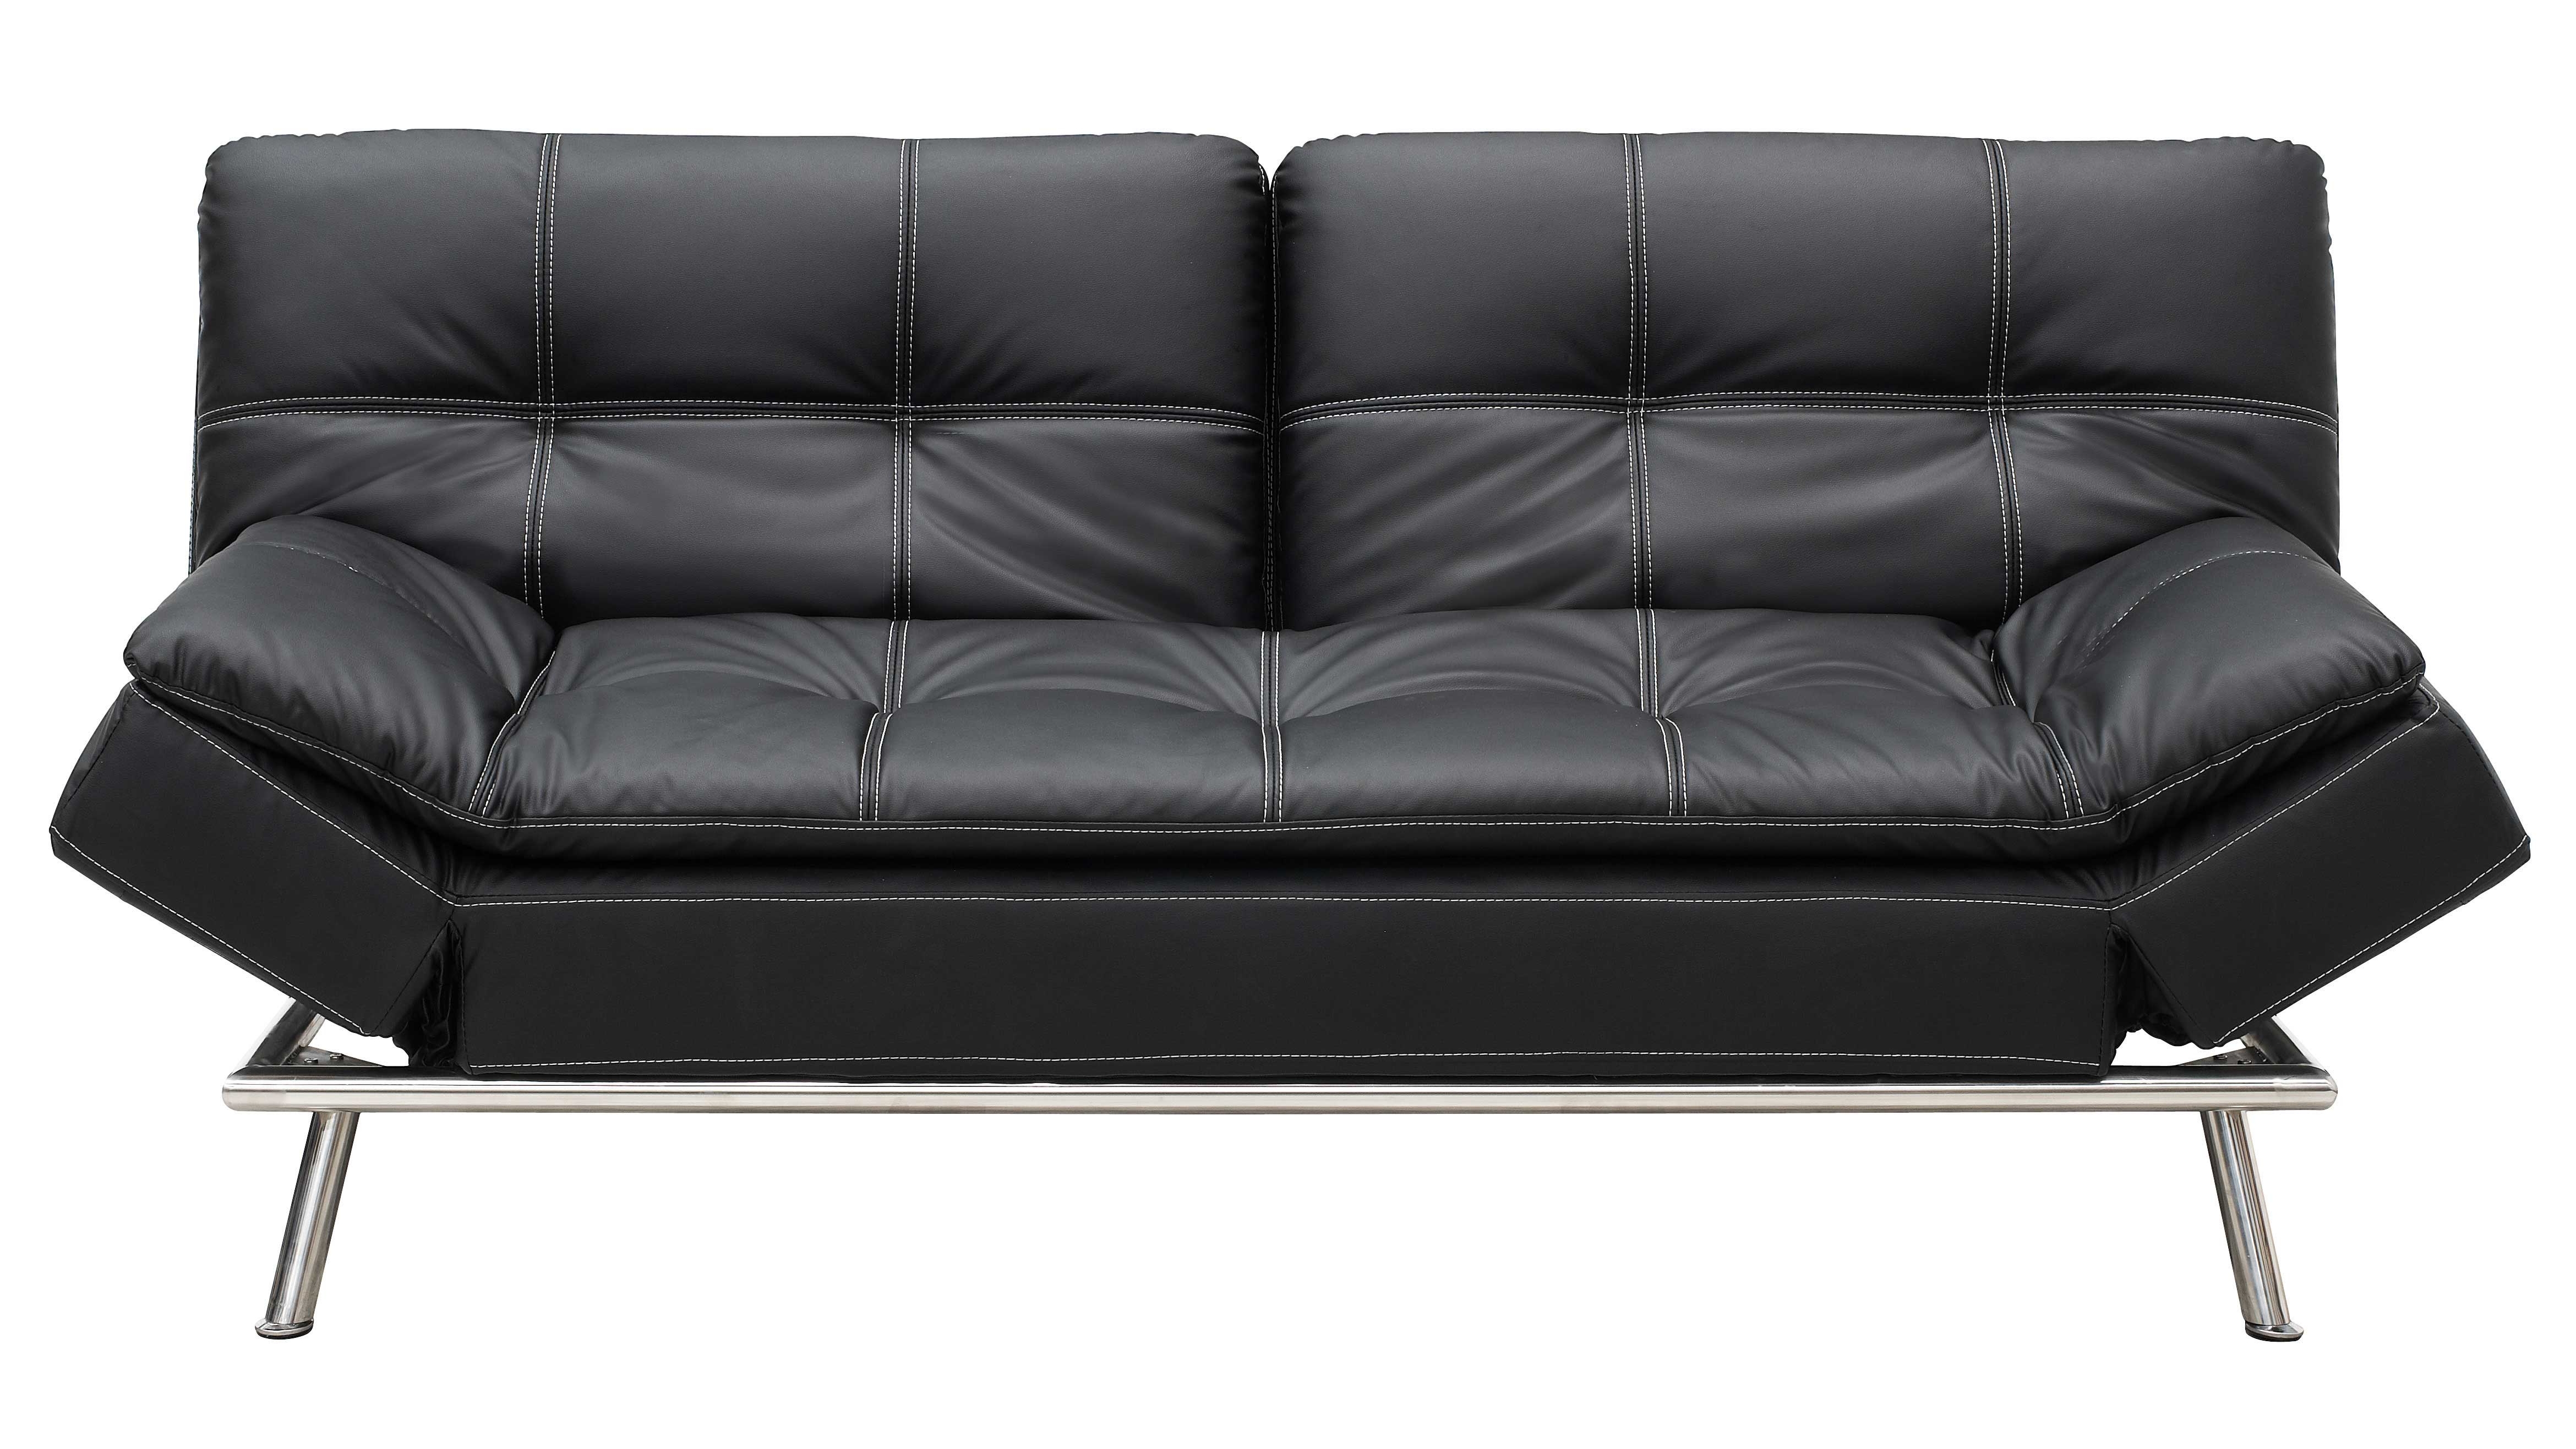 gemma fabric click clack sofa bed price